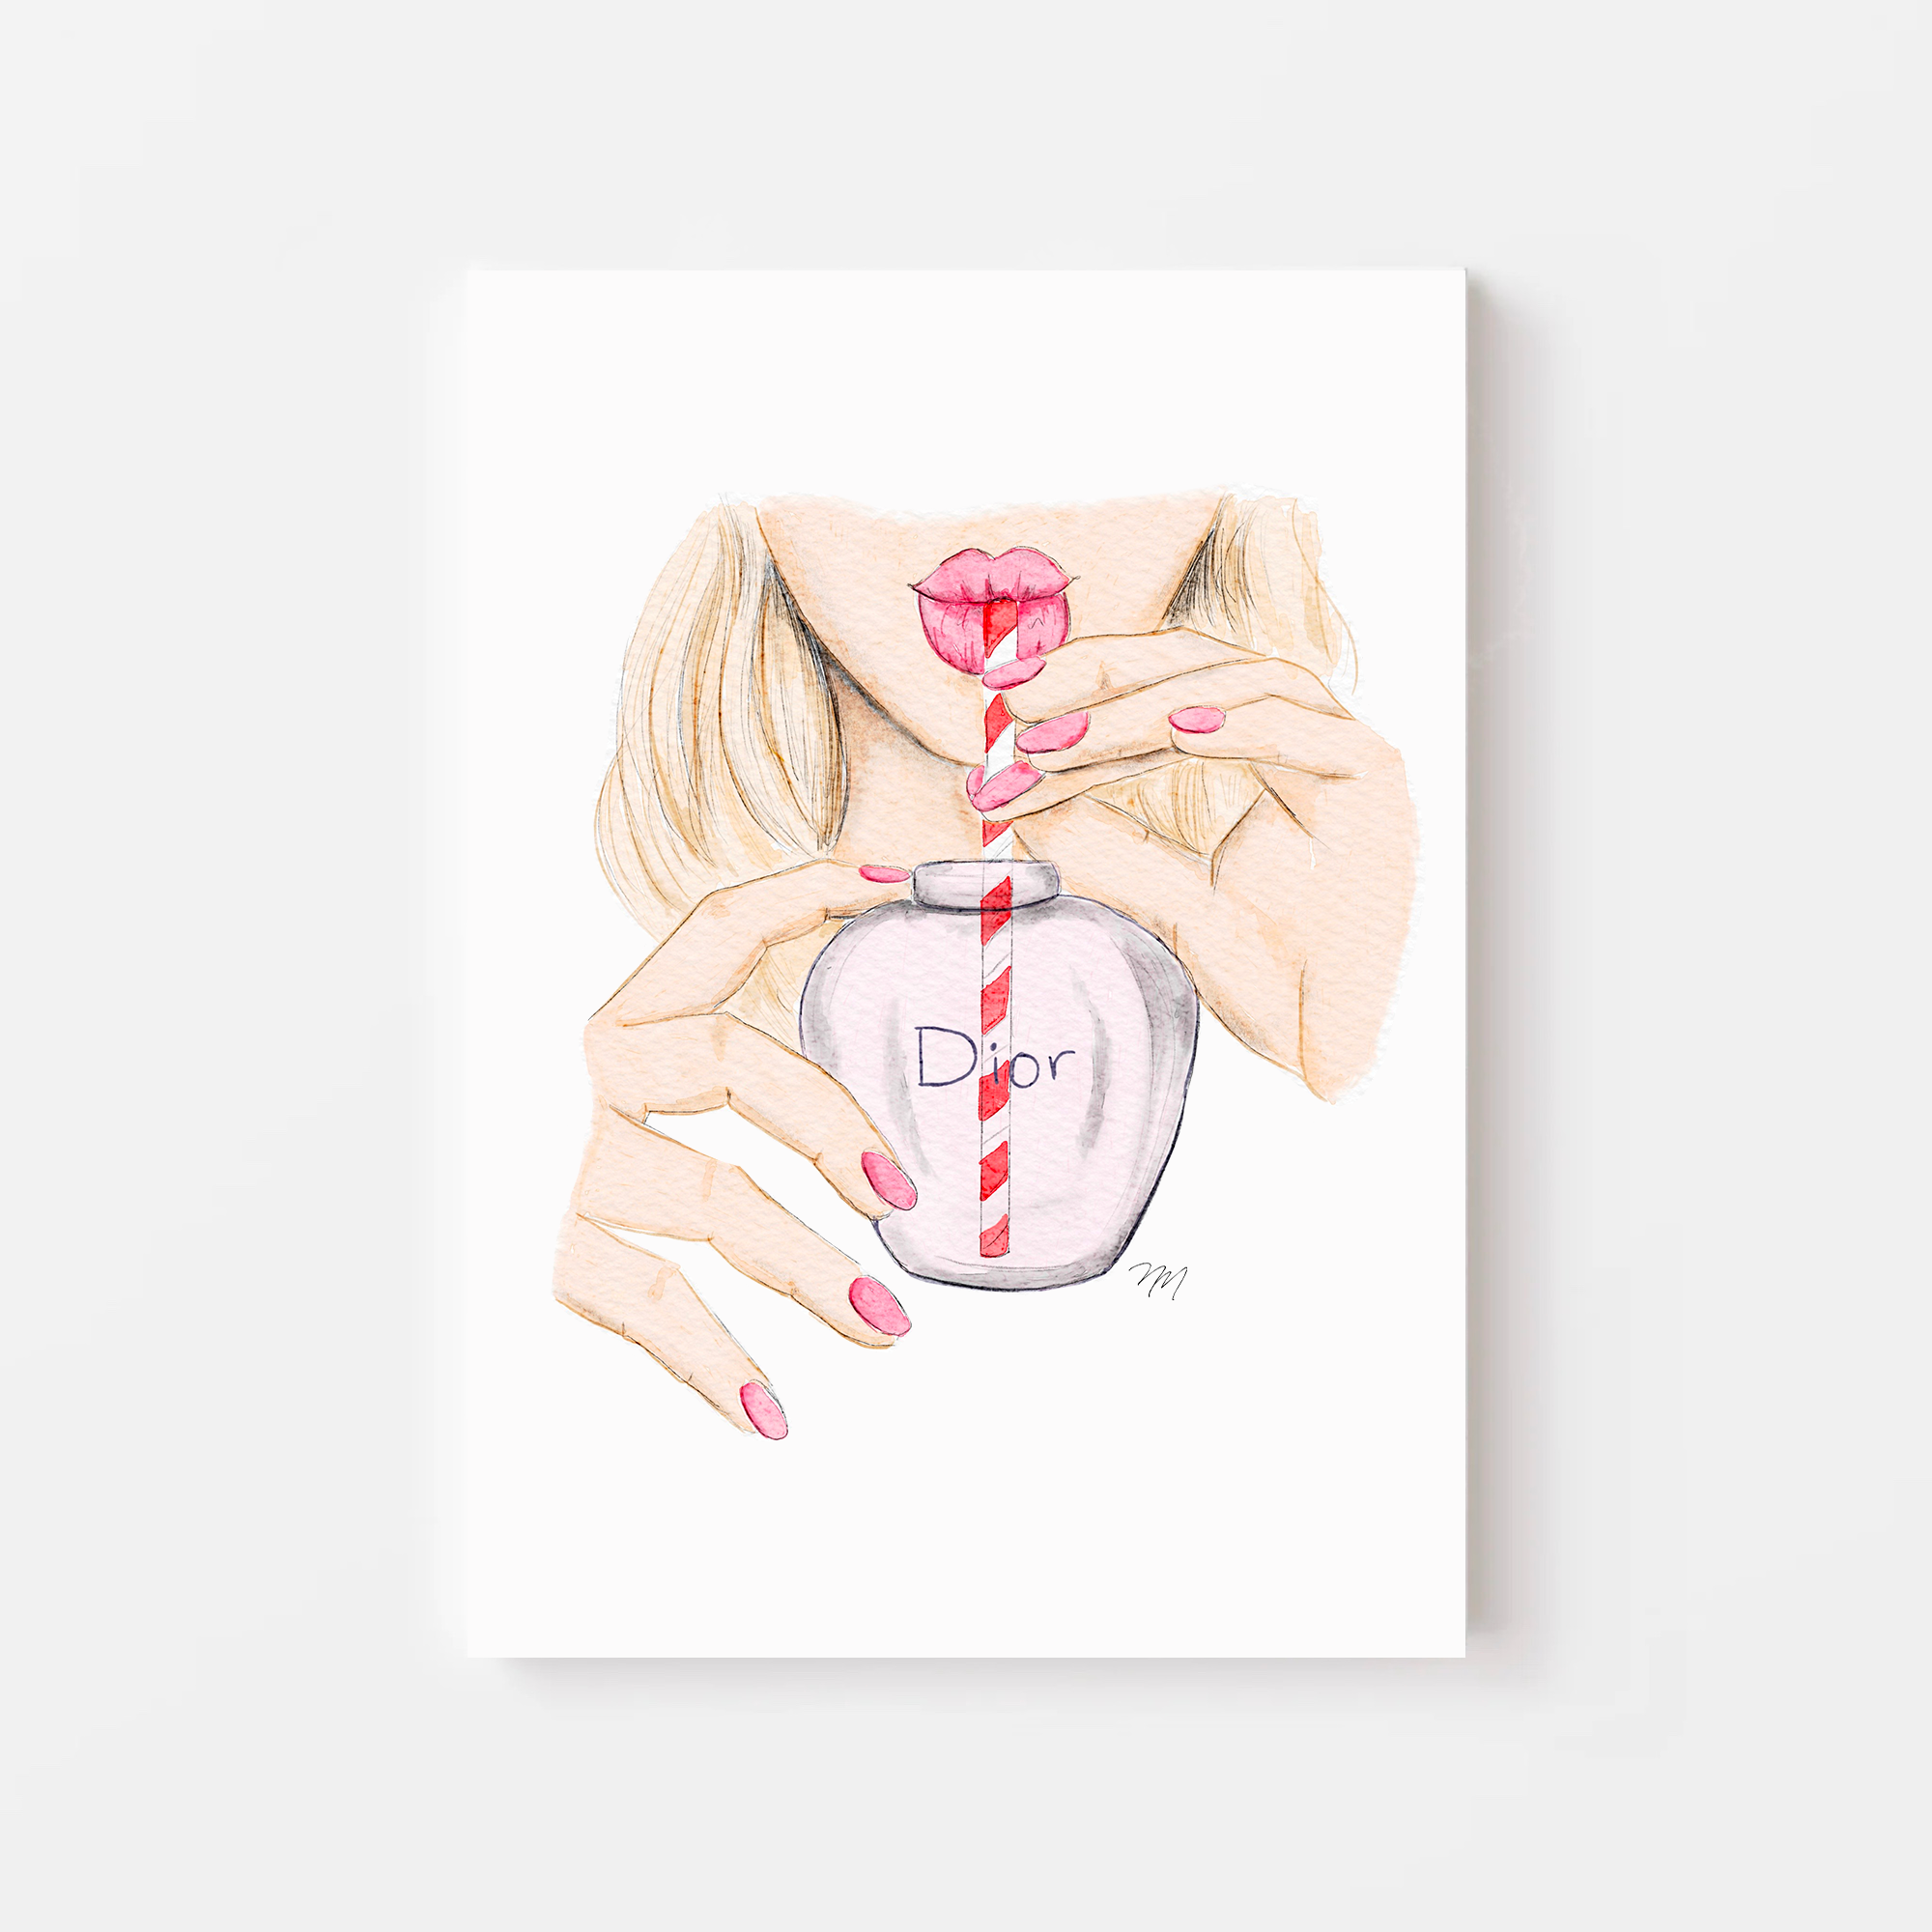 Chic and Refreshing: Perfume Fashion Illustration Print